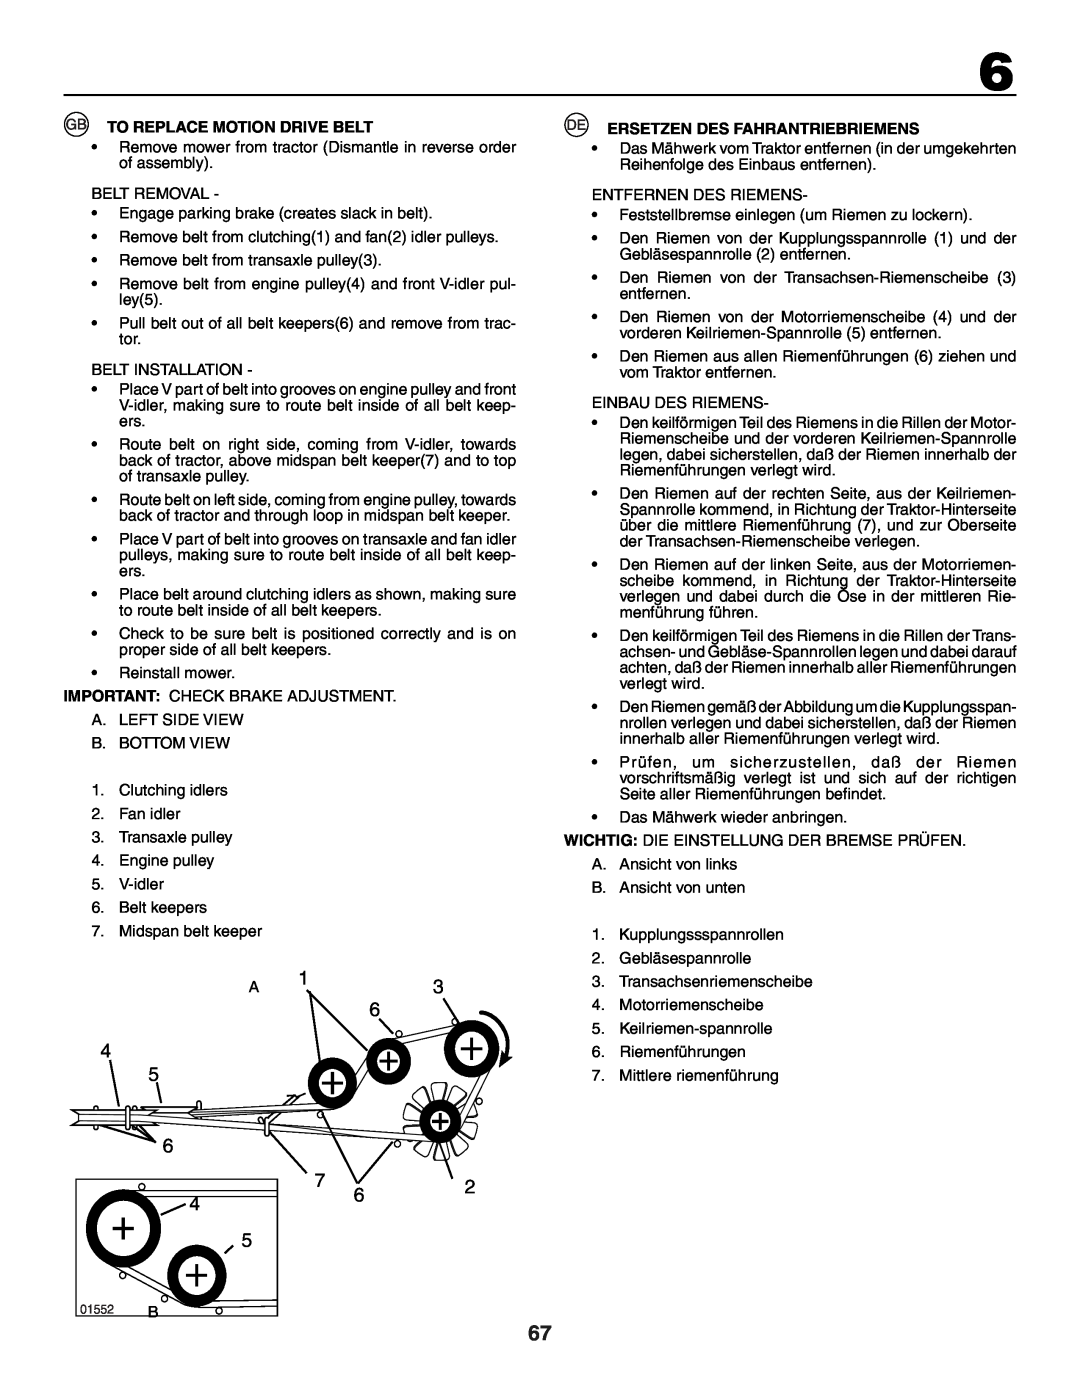 Husqvarna GTH250XP instruction manual To Replace Motion Drive Belt, Ersetzen Des Fahrantriebriemens, 01552 B 